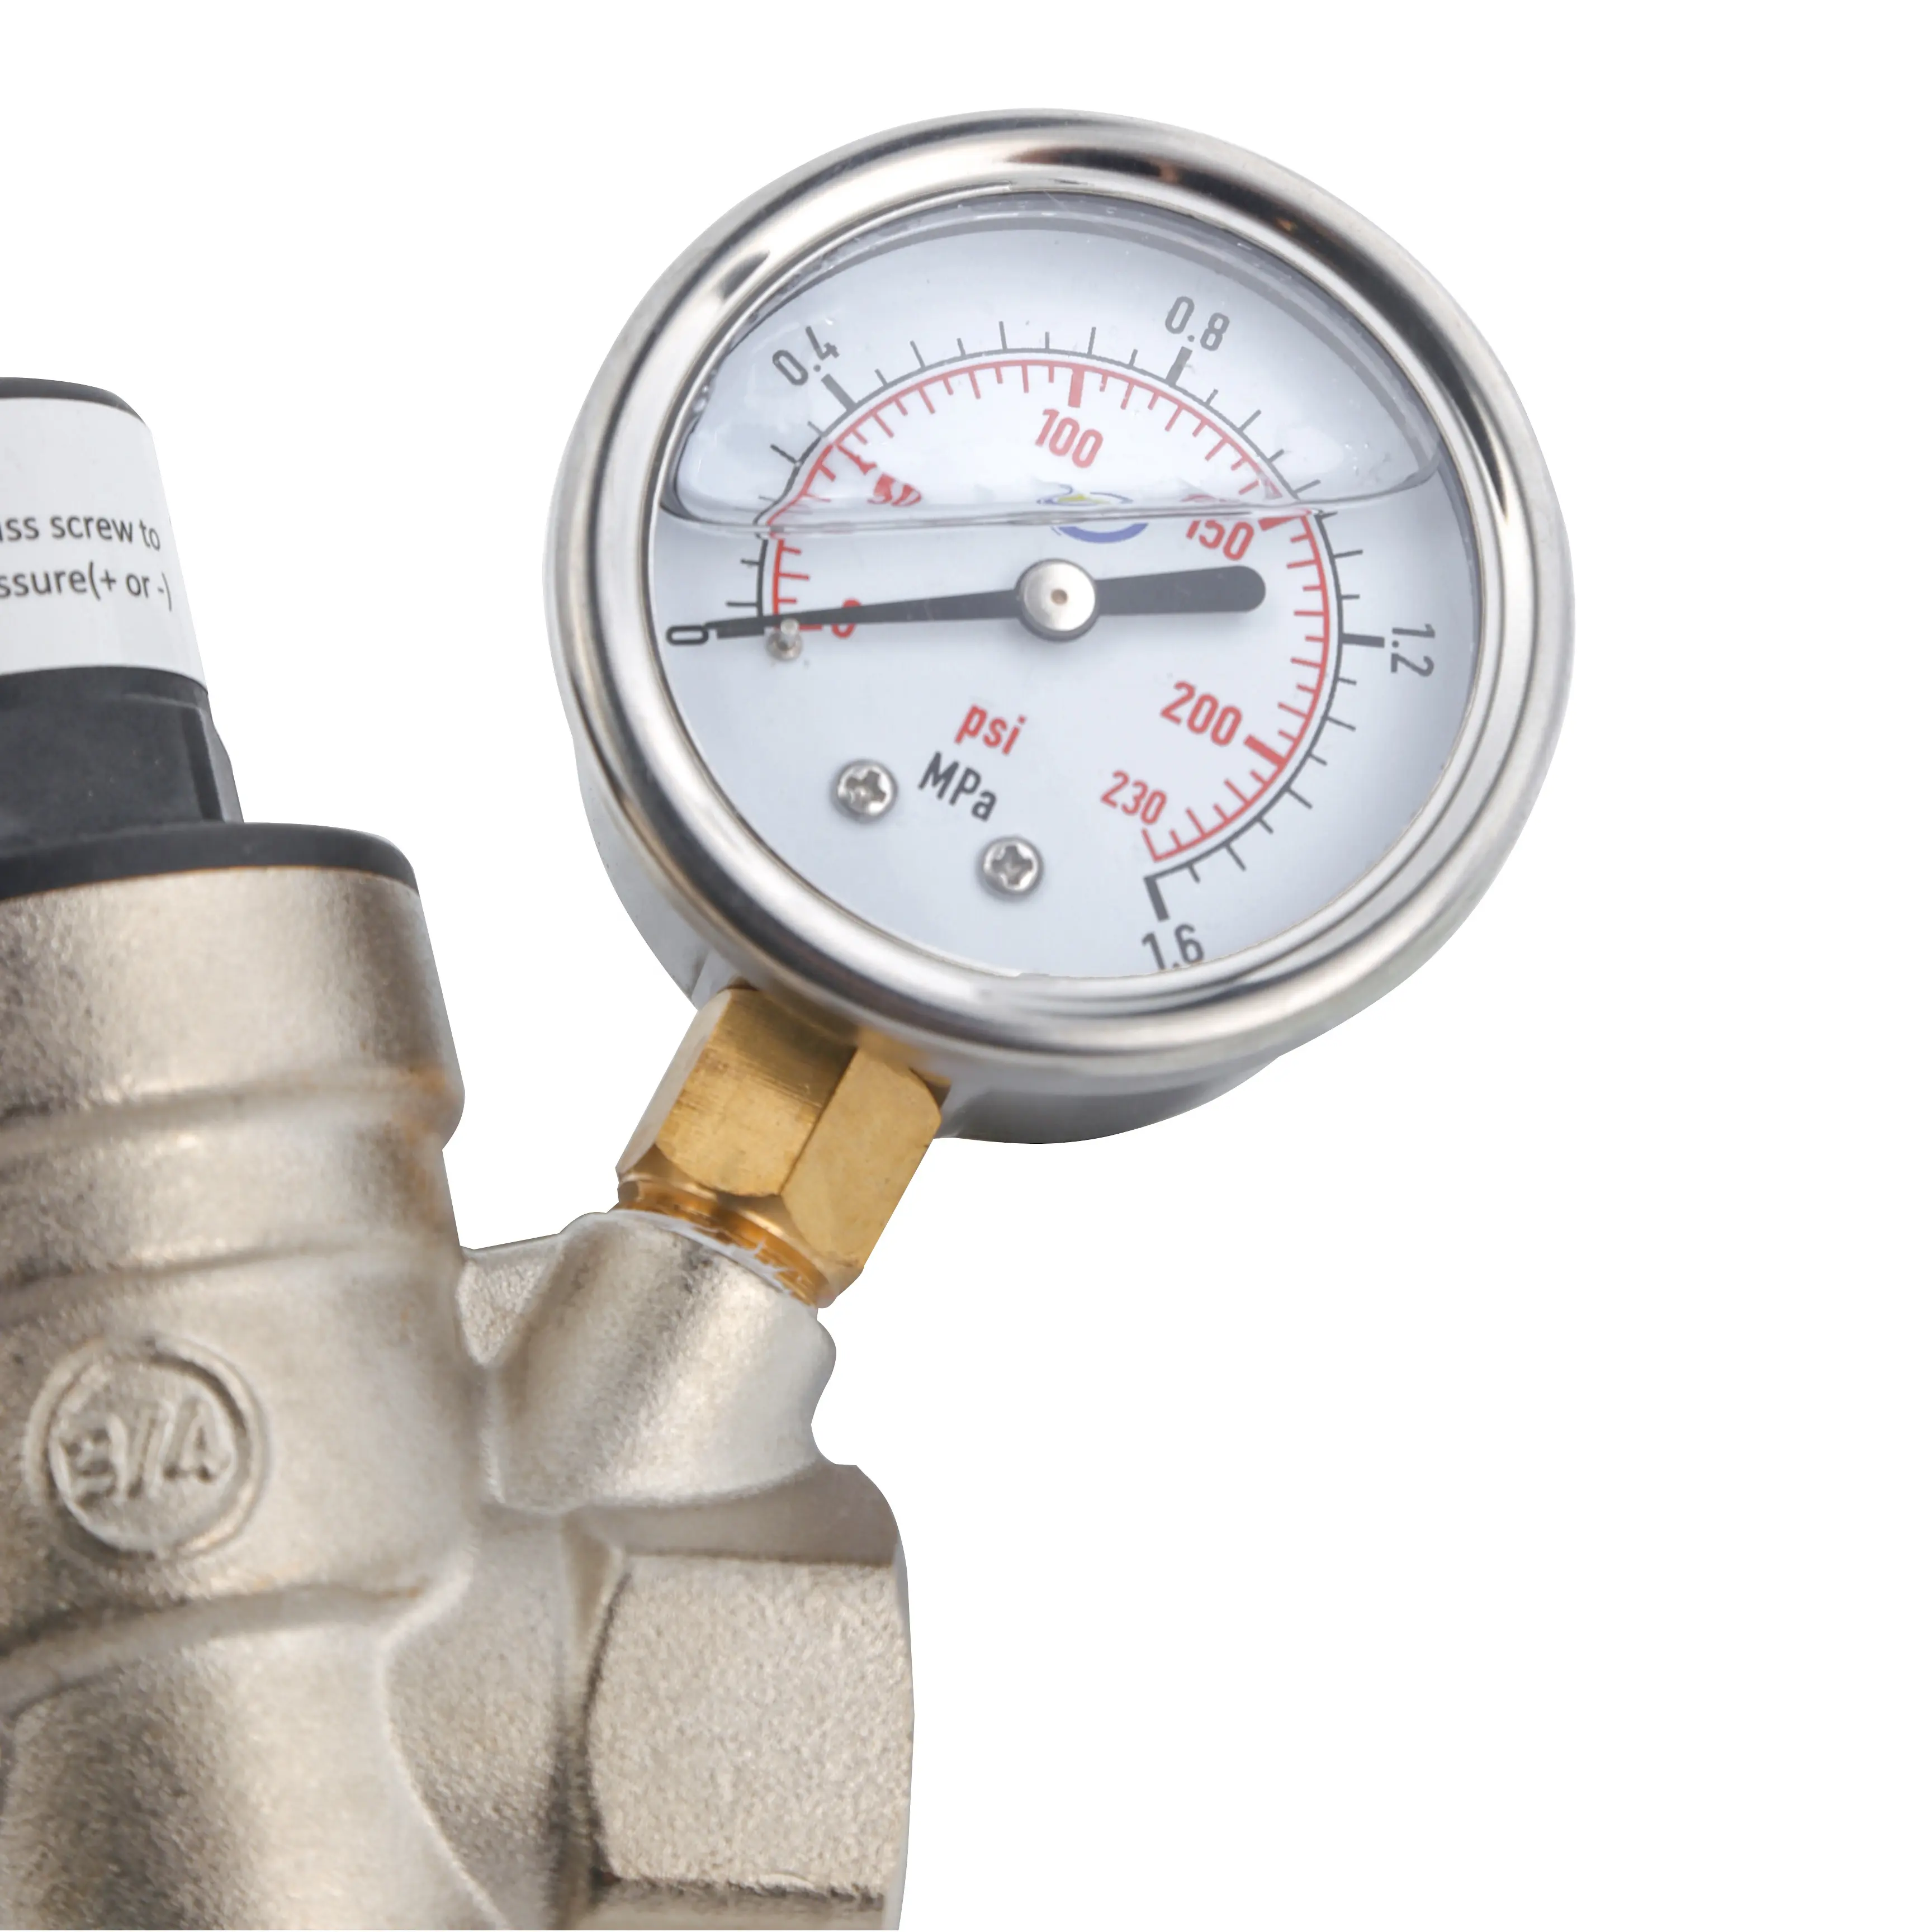 RV Water Pressure Regulator Water Pressure Reducer 3/4 Water Pressure Regulator With Gauge